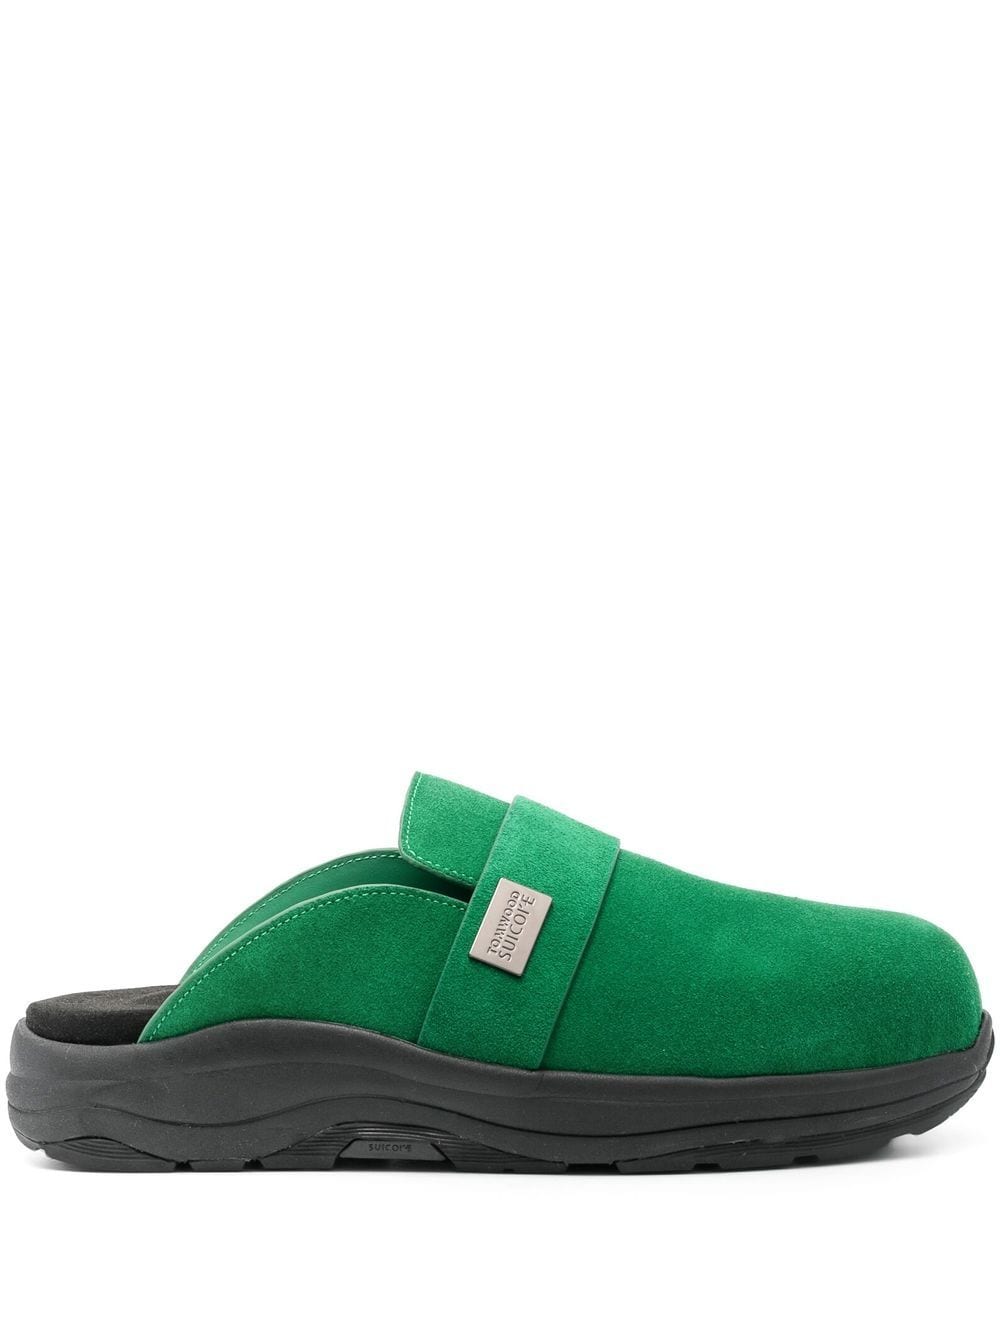 Suicoke suede-leather slippers - Green von Suicoke